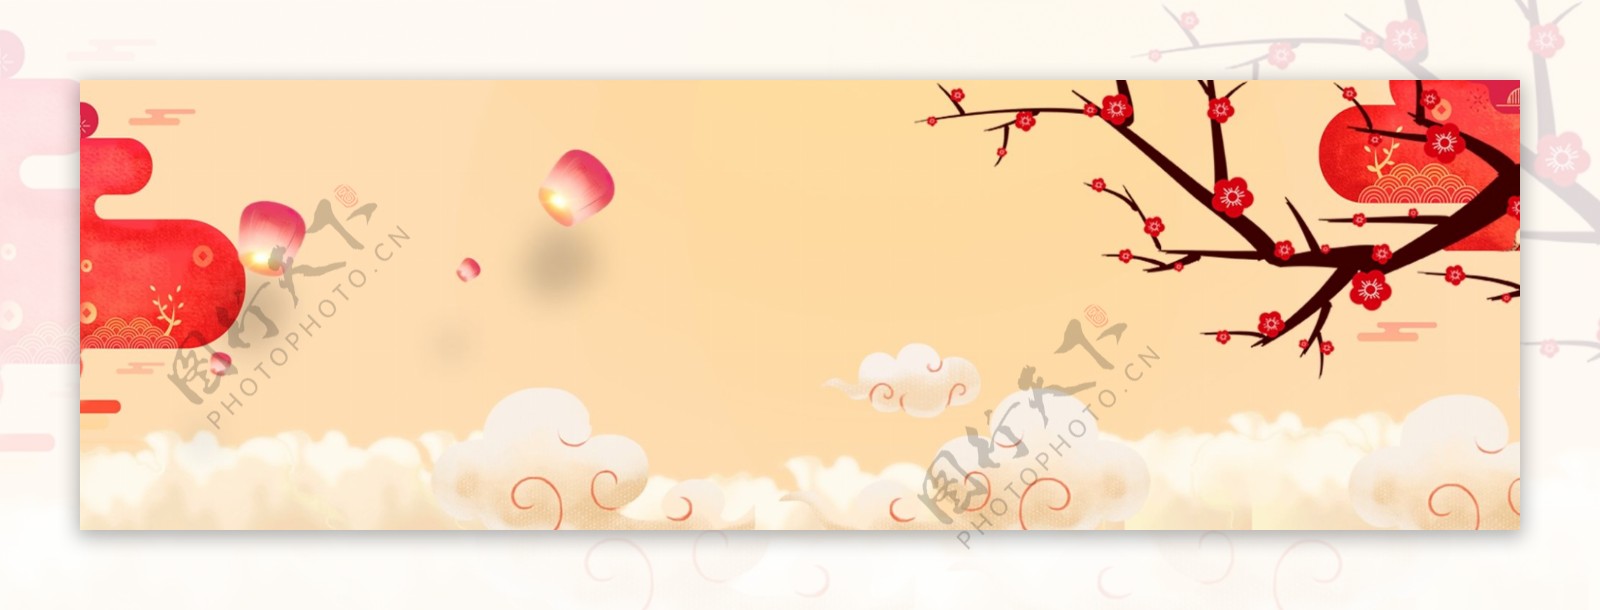 黄色中国风新年节日banner背景